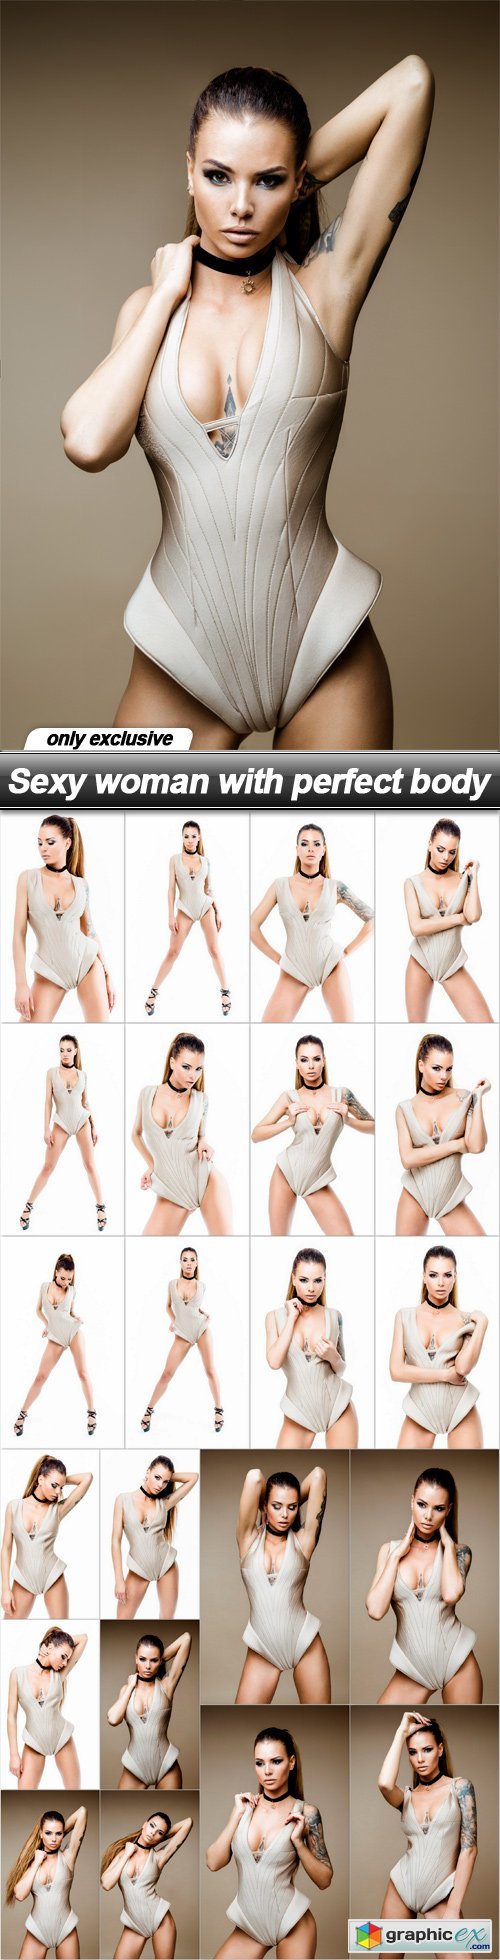 Sexy woman with perfect body - 22 UHQ JPEG